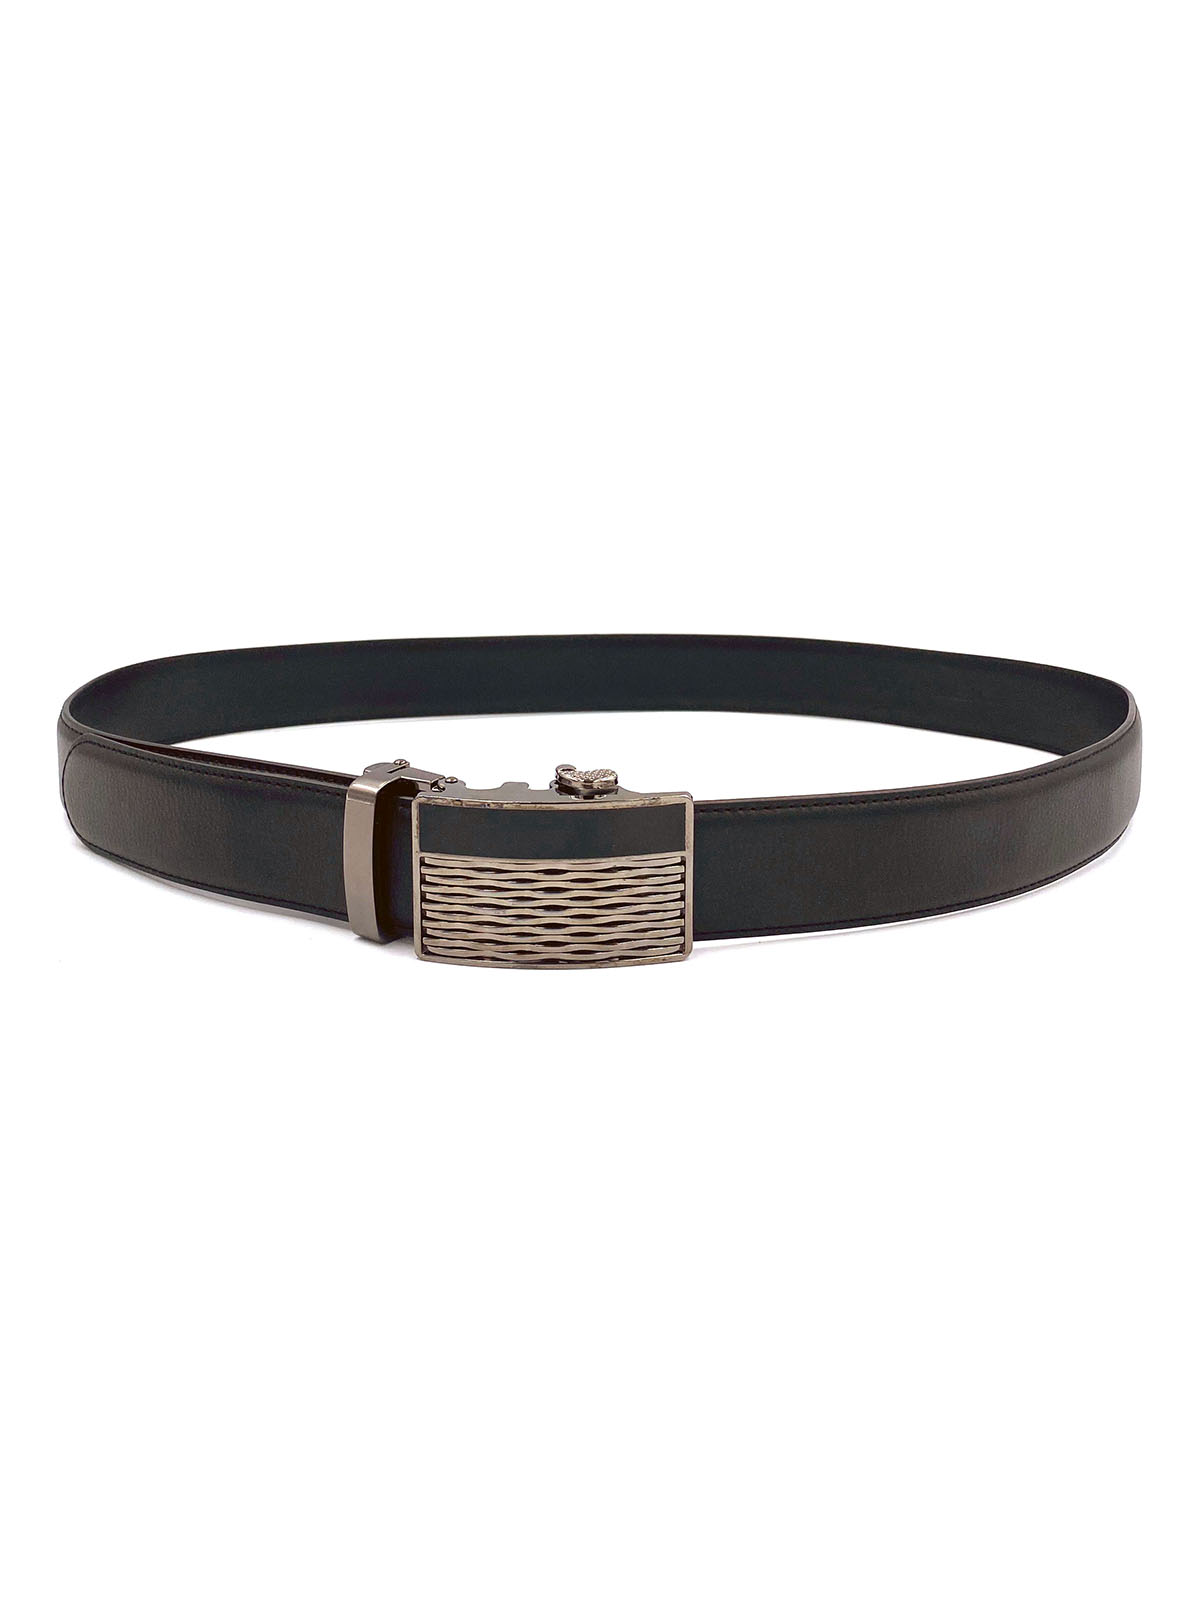 Black smooth leather belt - 10424 - € 21.37 img2